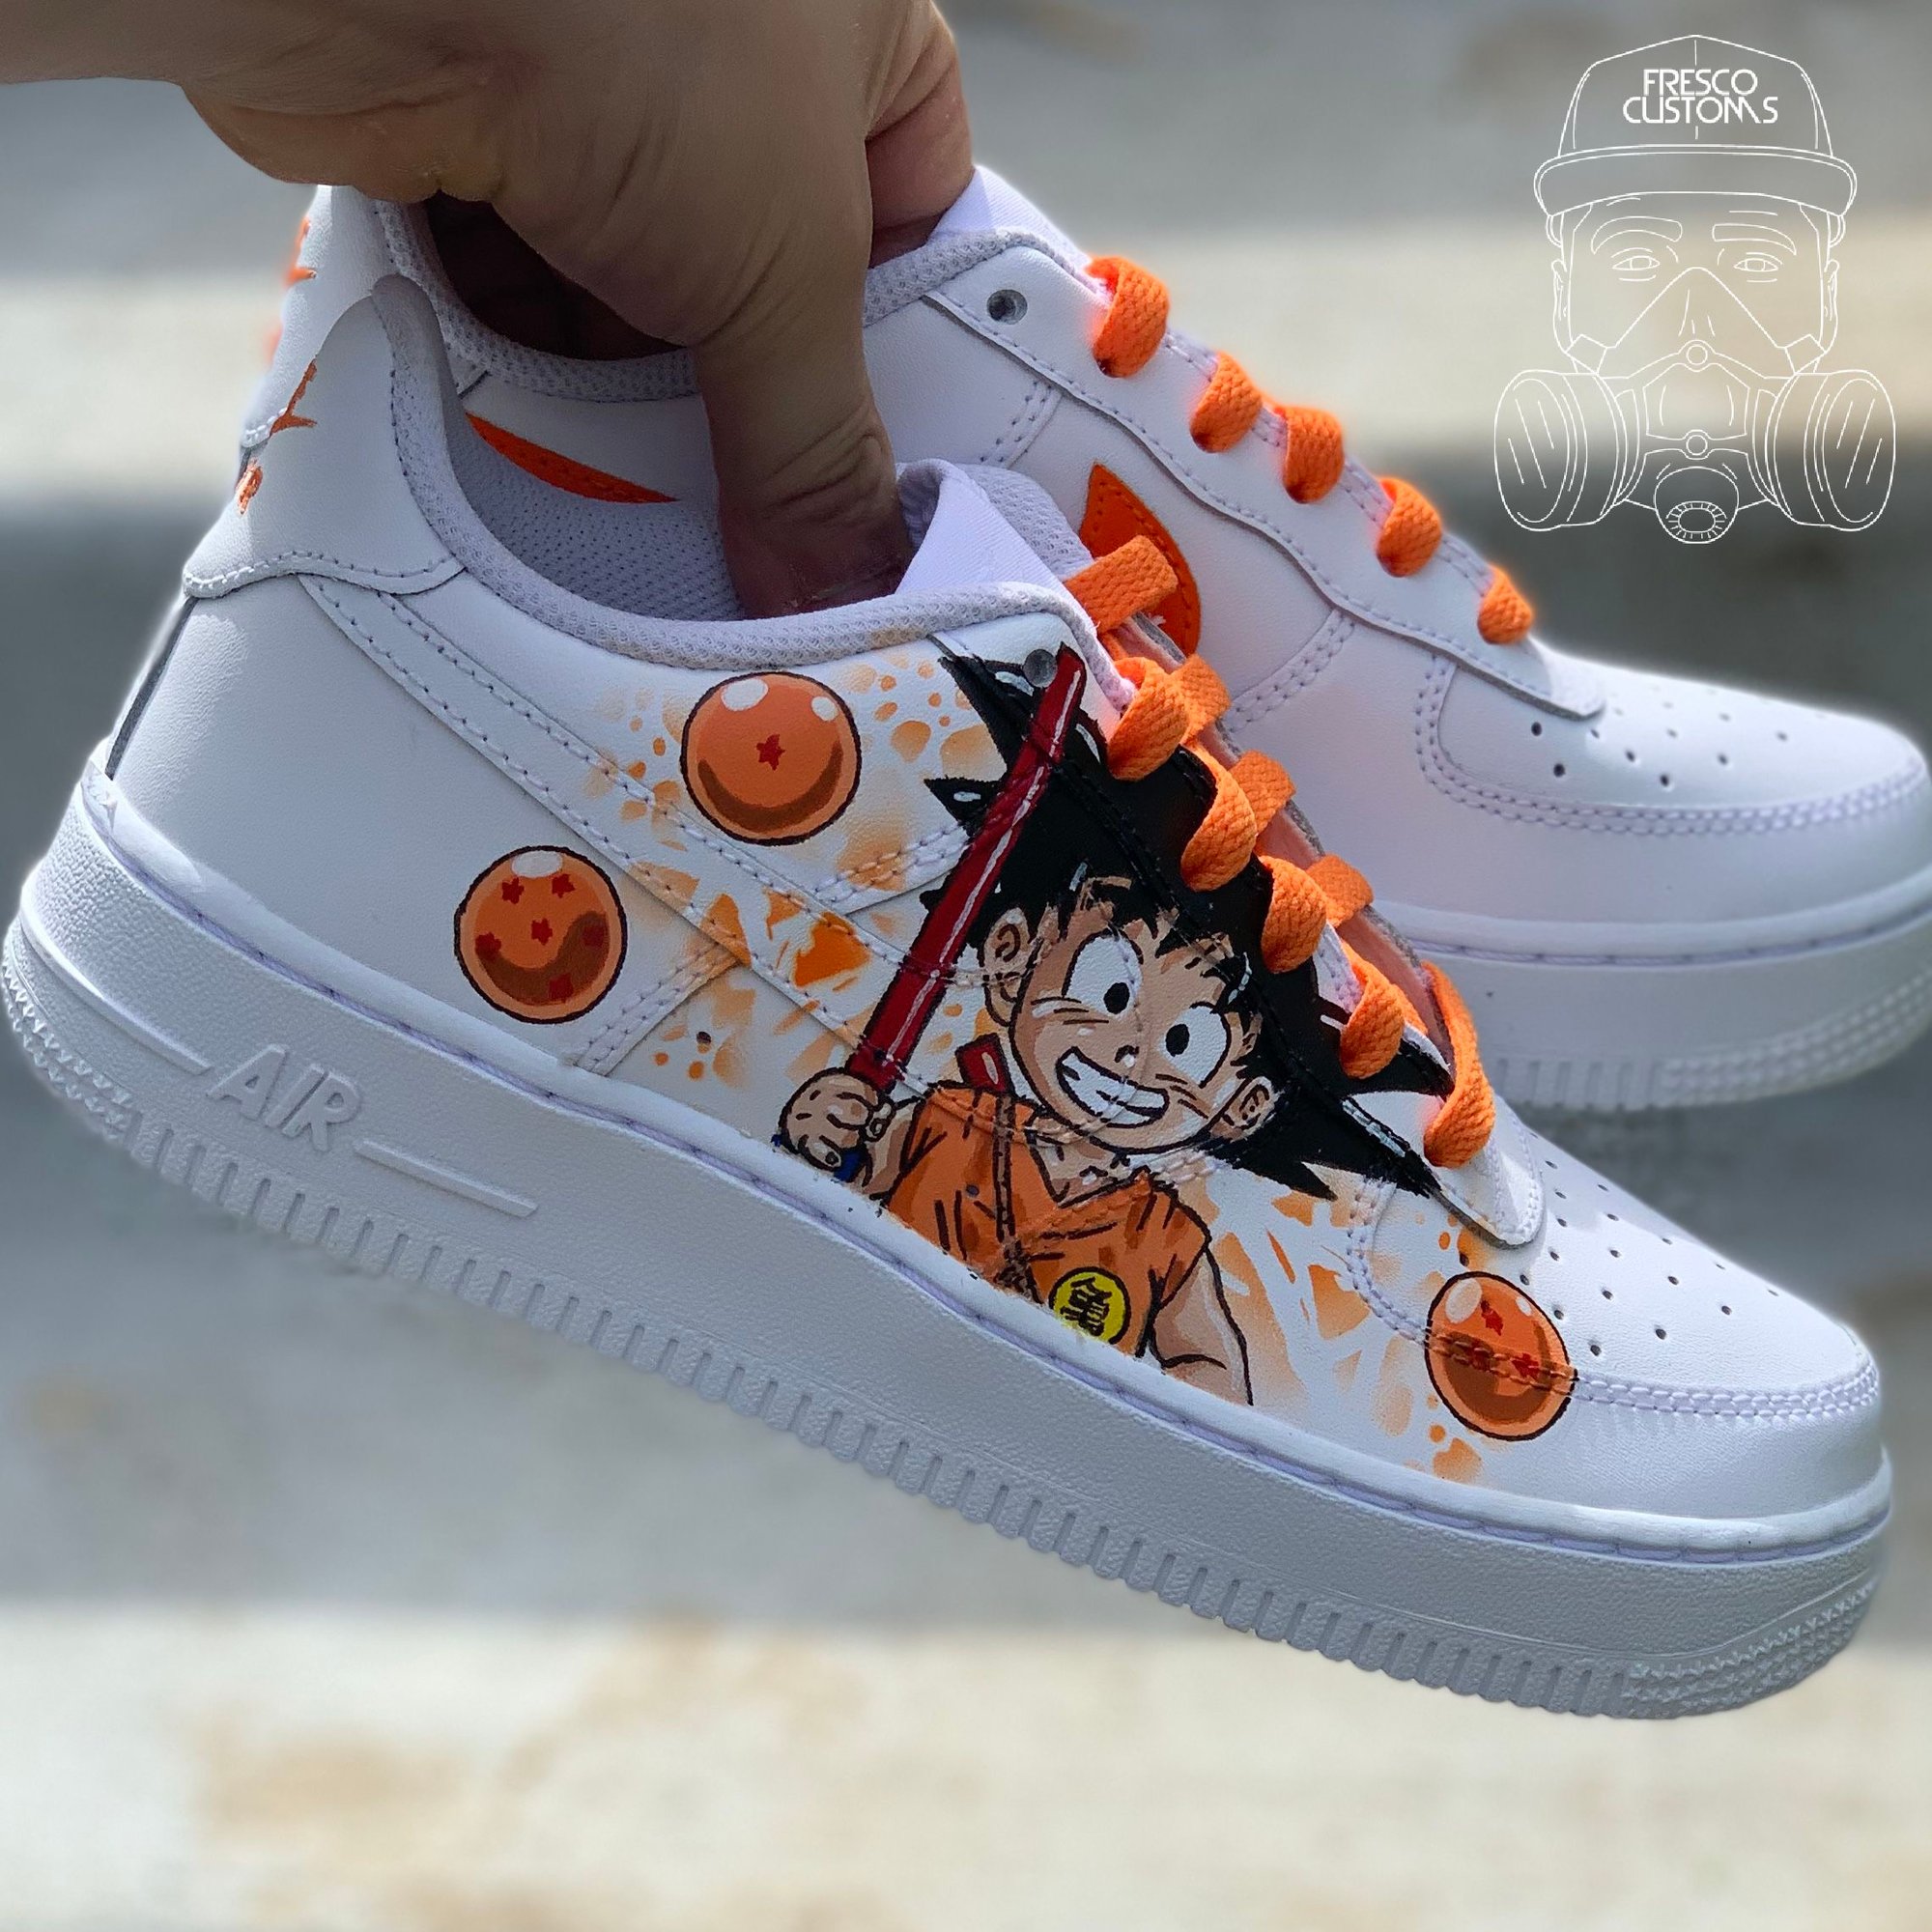 Correspondiente a Adiccion ayer Custom Baby Goku Nike Air Forces | Fresco Customs